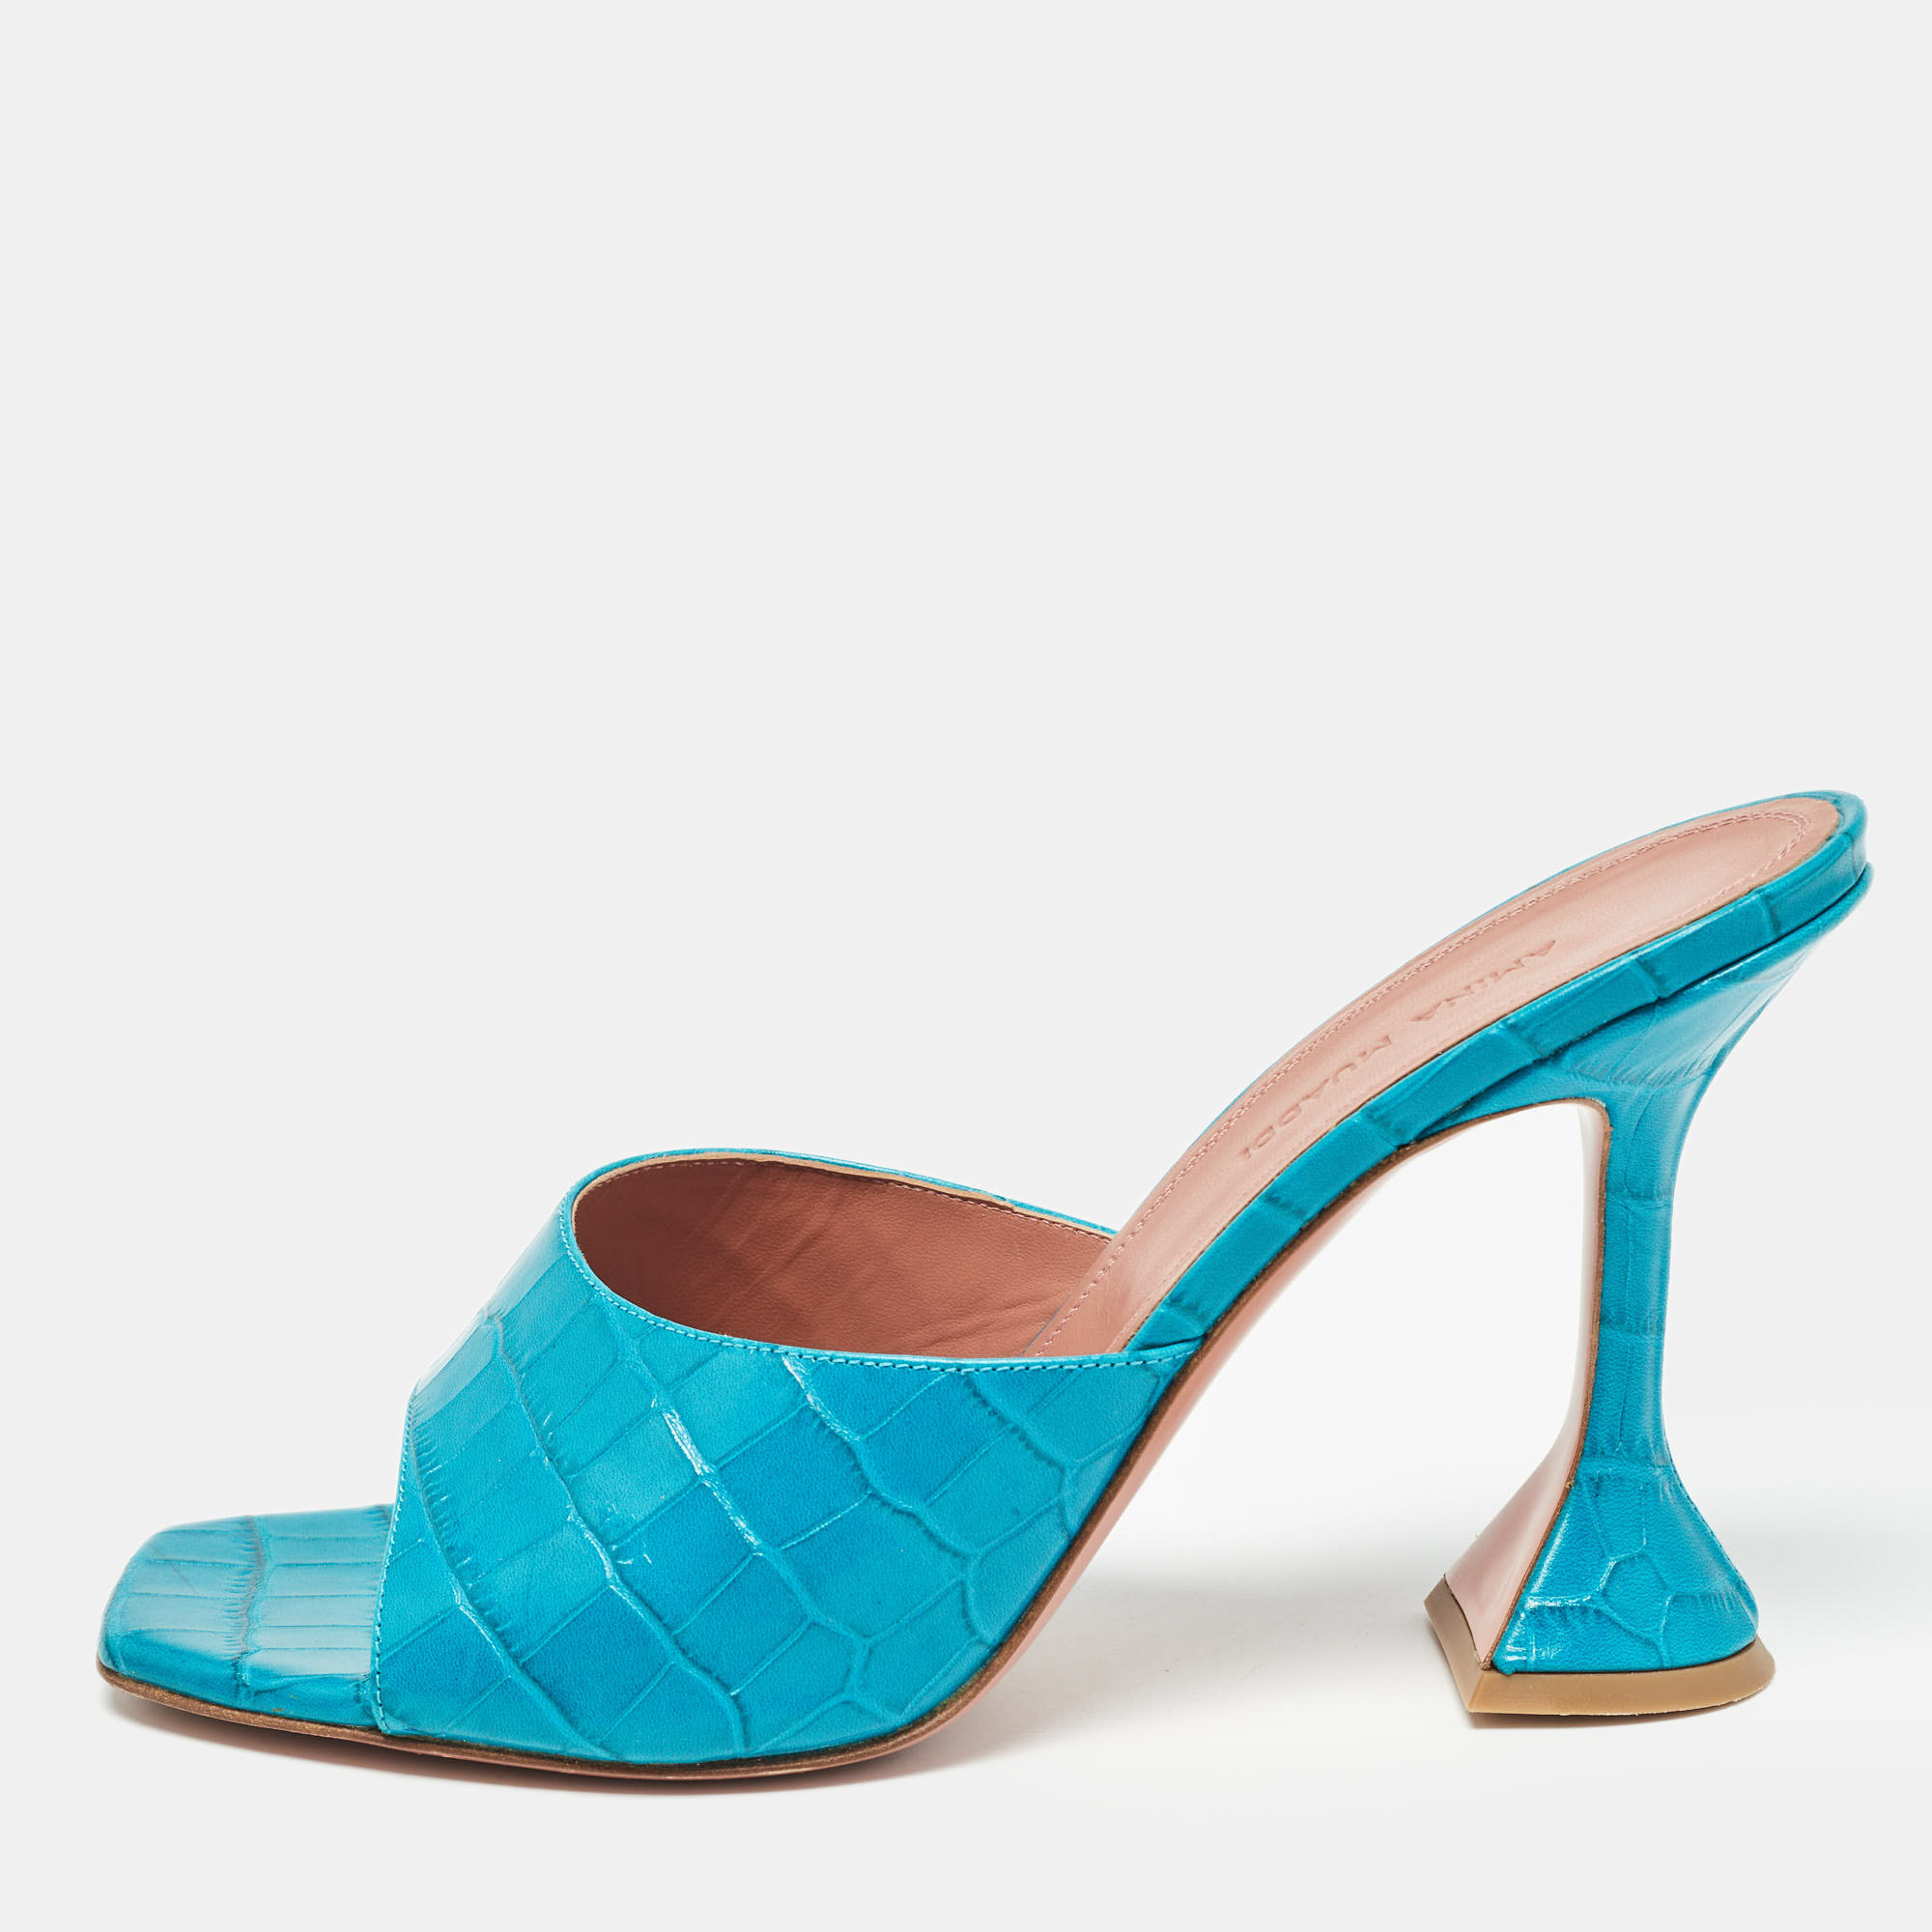 Pre-owned Amina Muaddi Teal Blue Croc Embossed Leather Lupita Slide Sandals Size 39.5